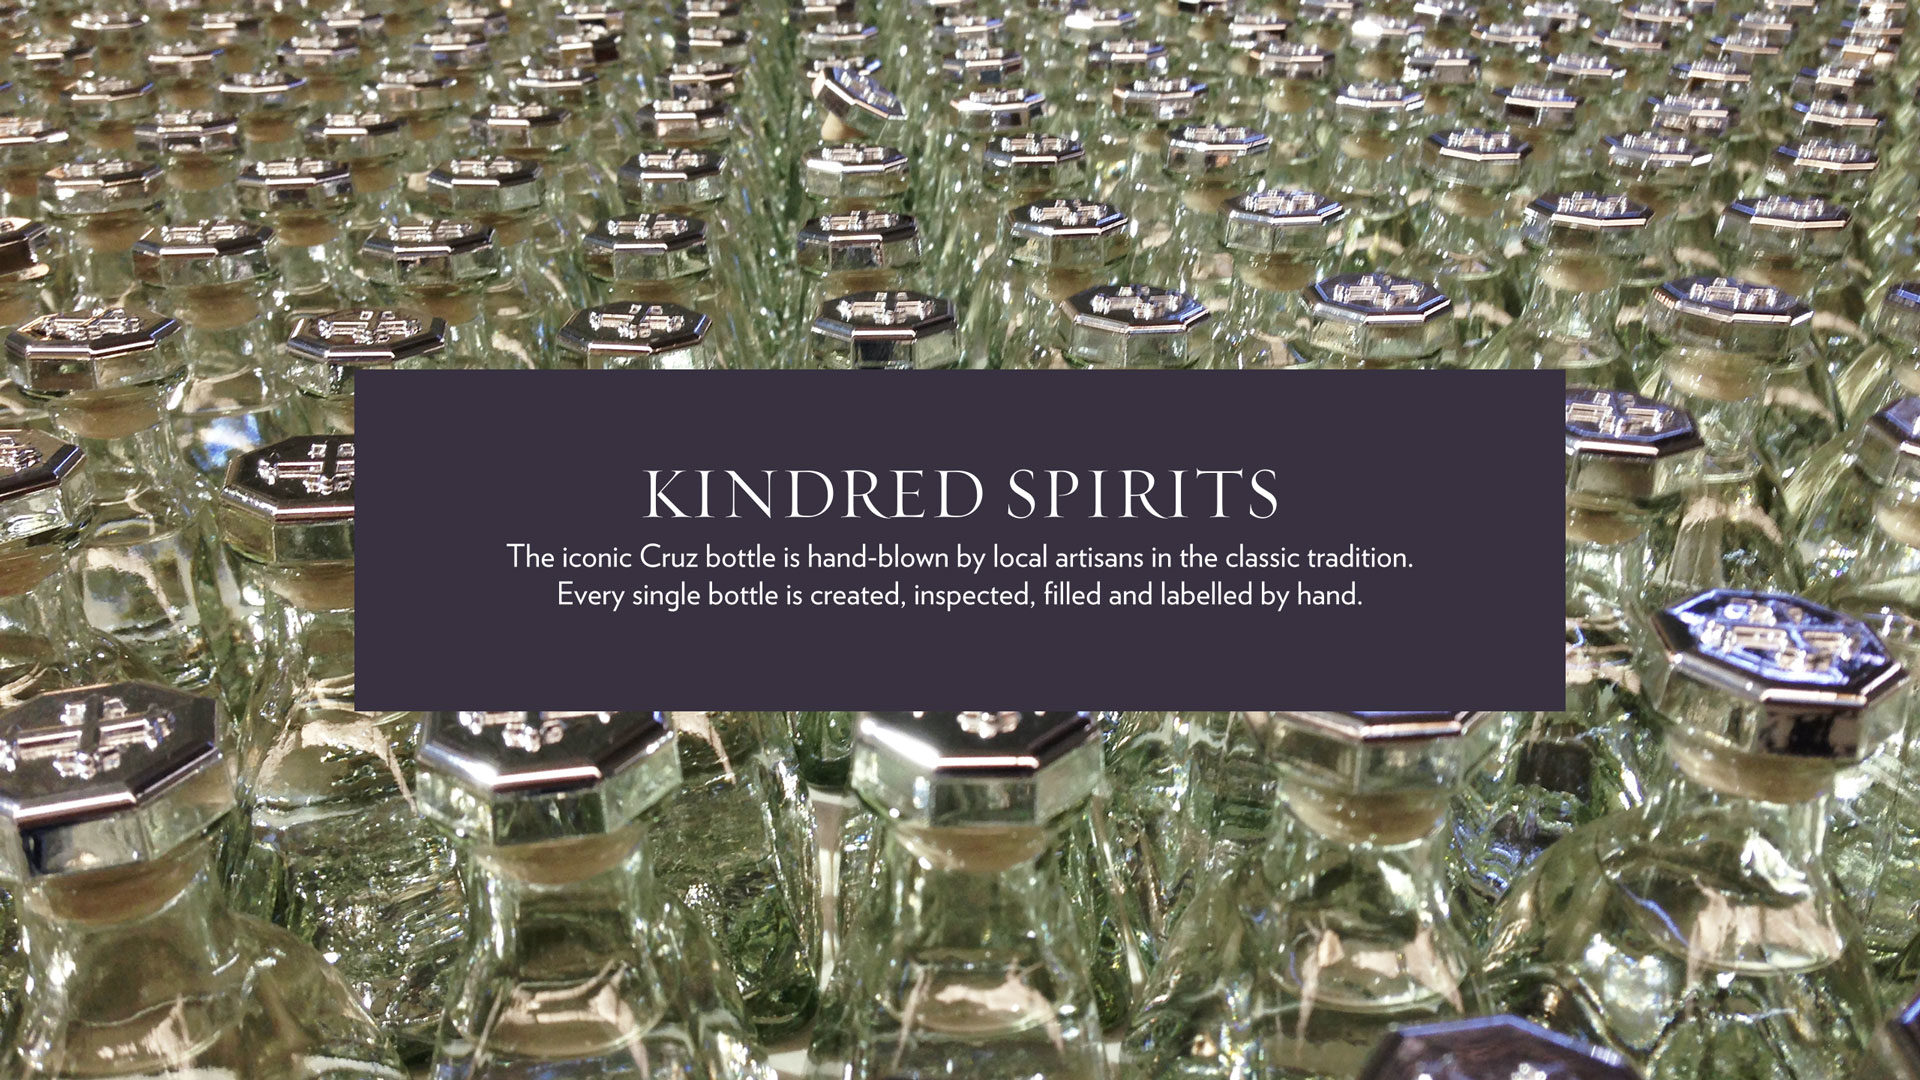 Kindred spirits image hundreds of bottles of Cruz